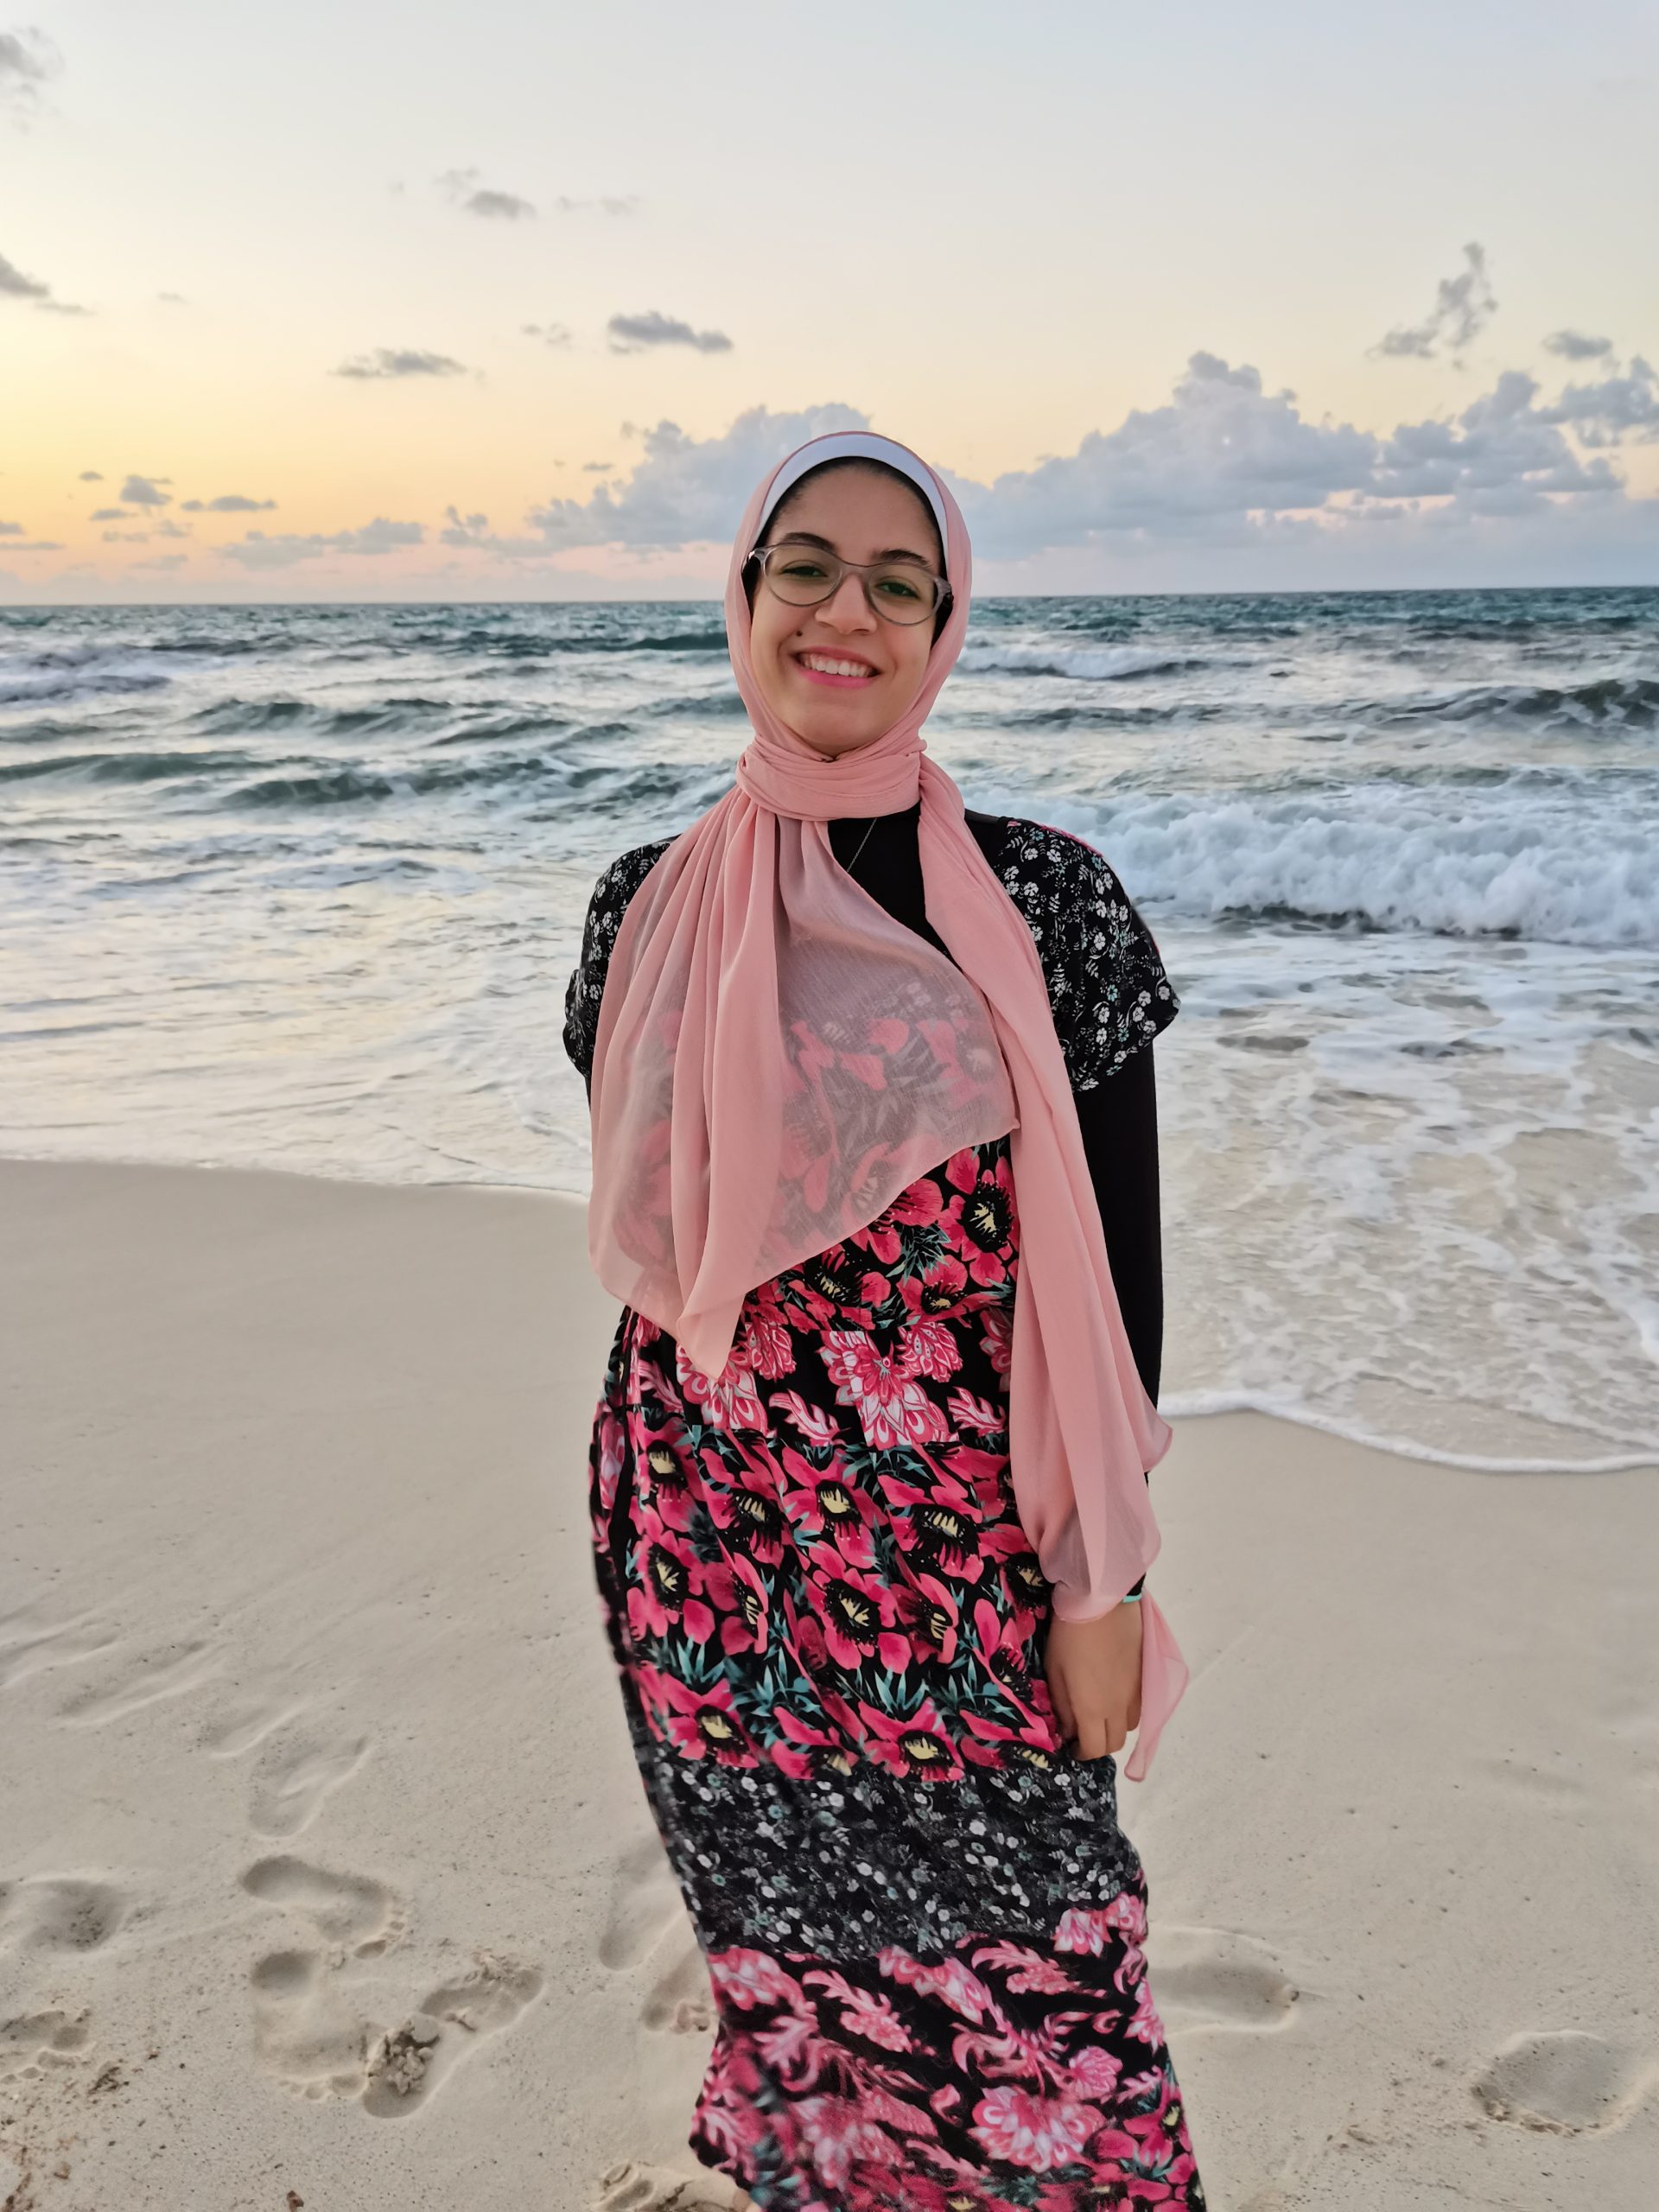 Rahaf Hossam standing on the beach